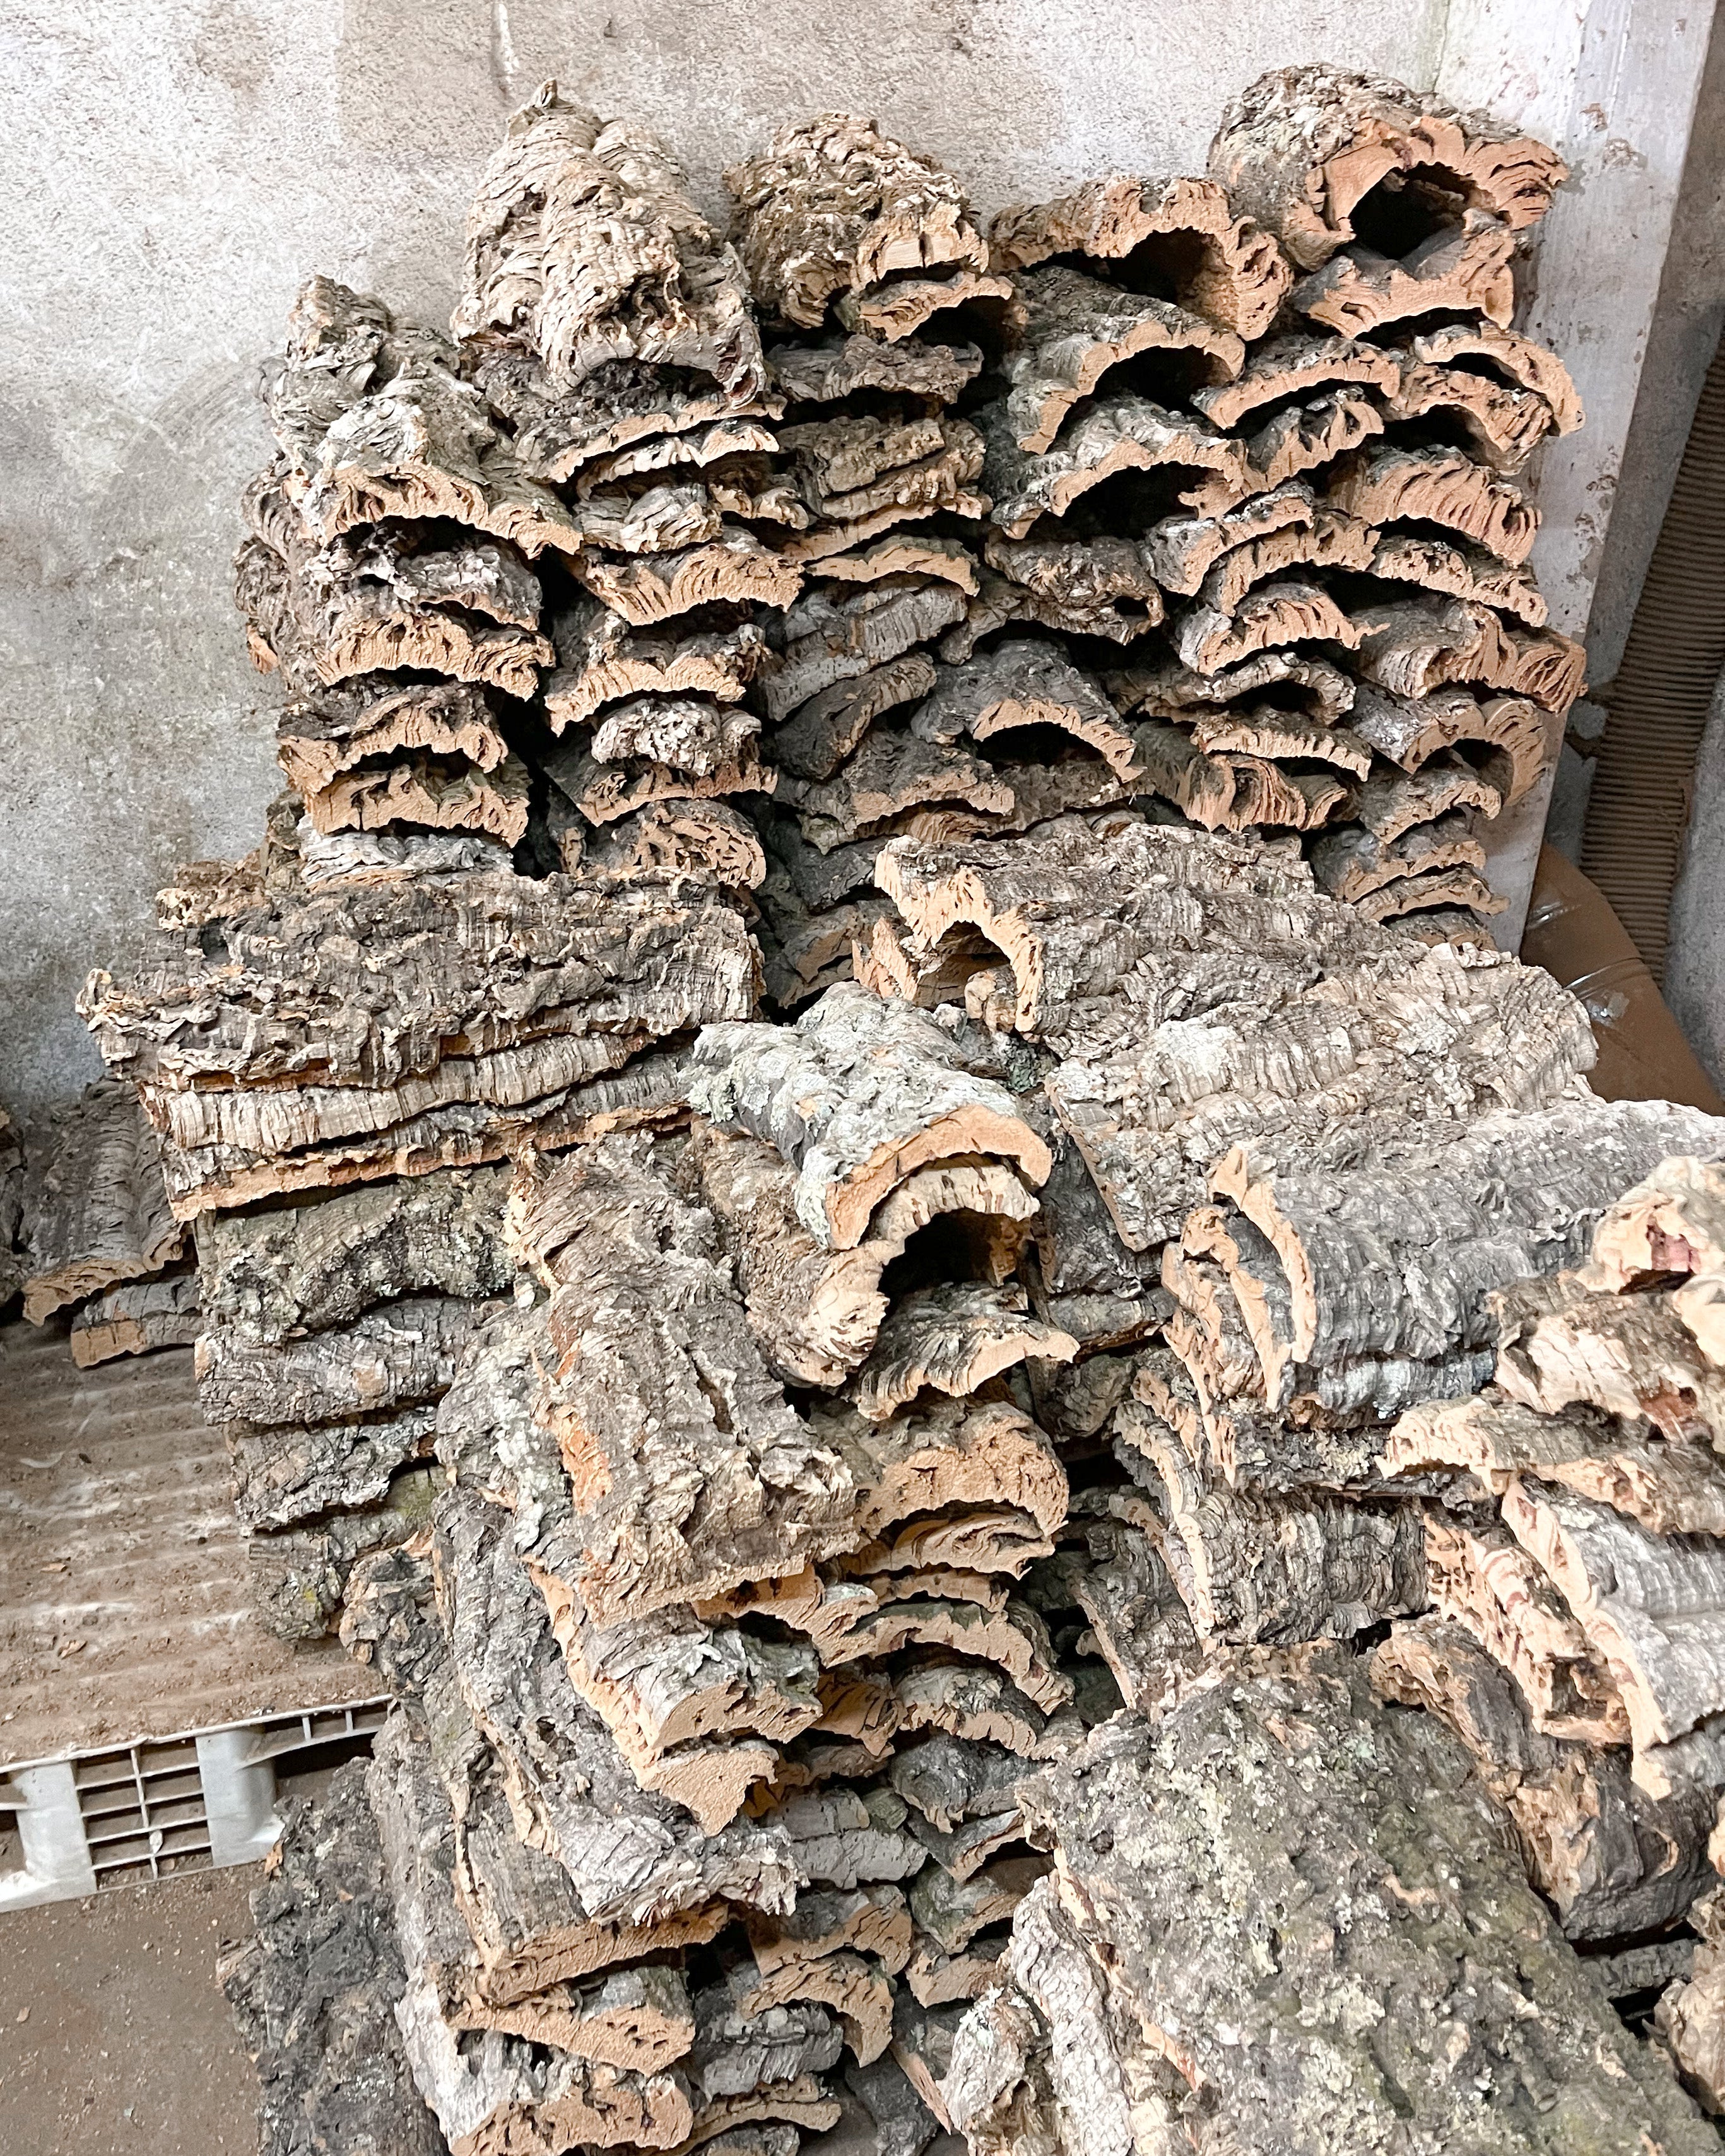 air plant tillandsia cork bark display